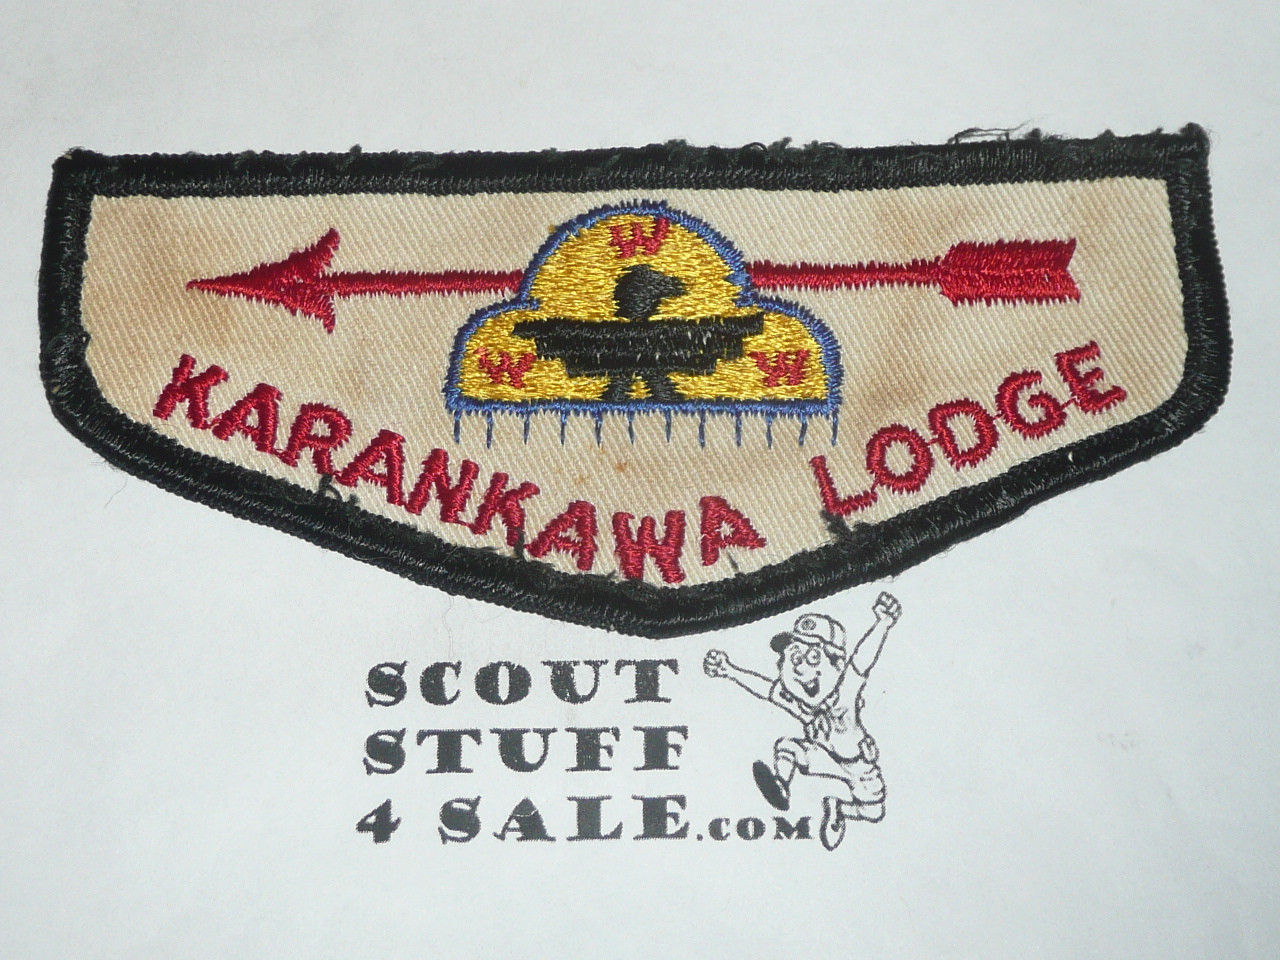 Order of the Arrow Lodge #307 Karankawa f3 Flap Patch, sewn with some twill discoloration but still stiff